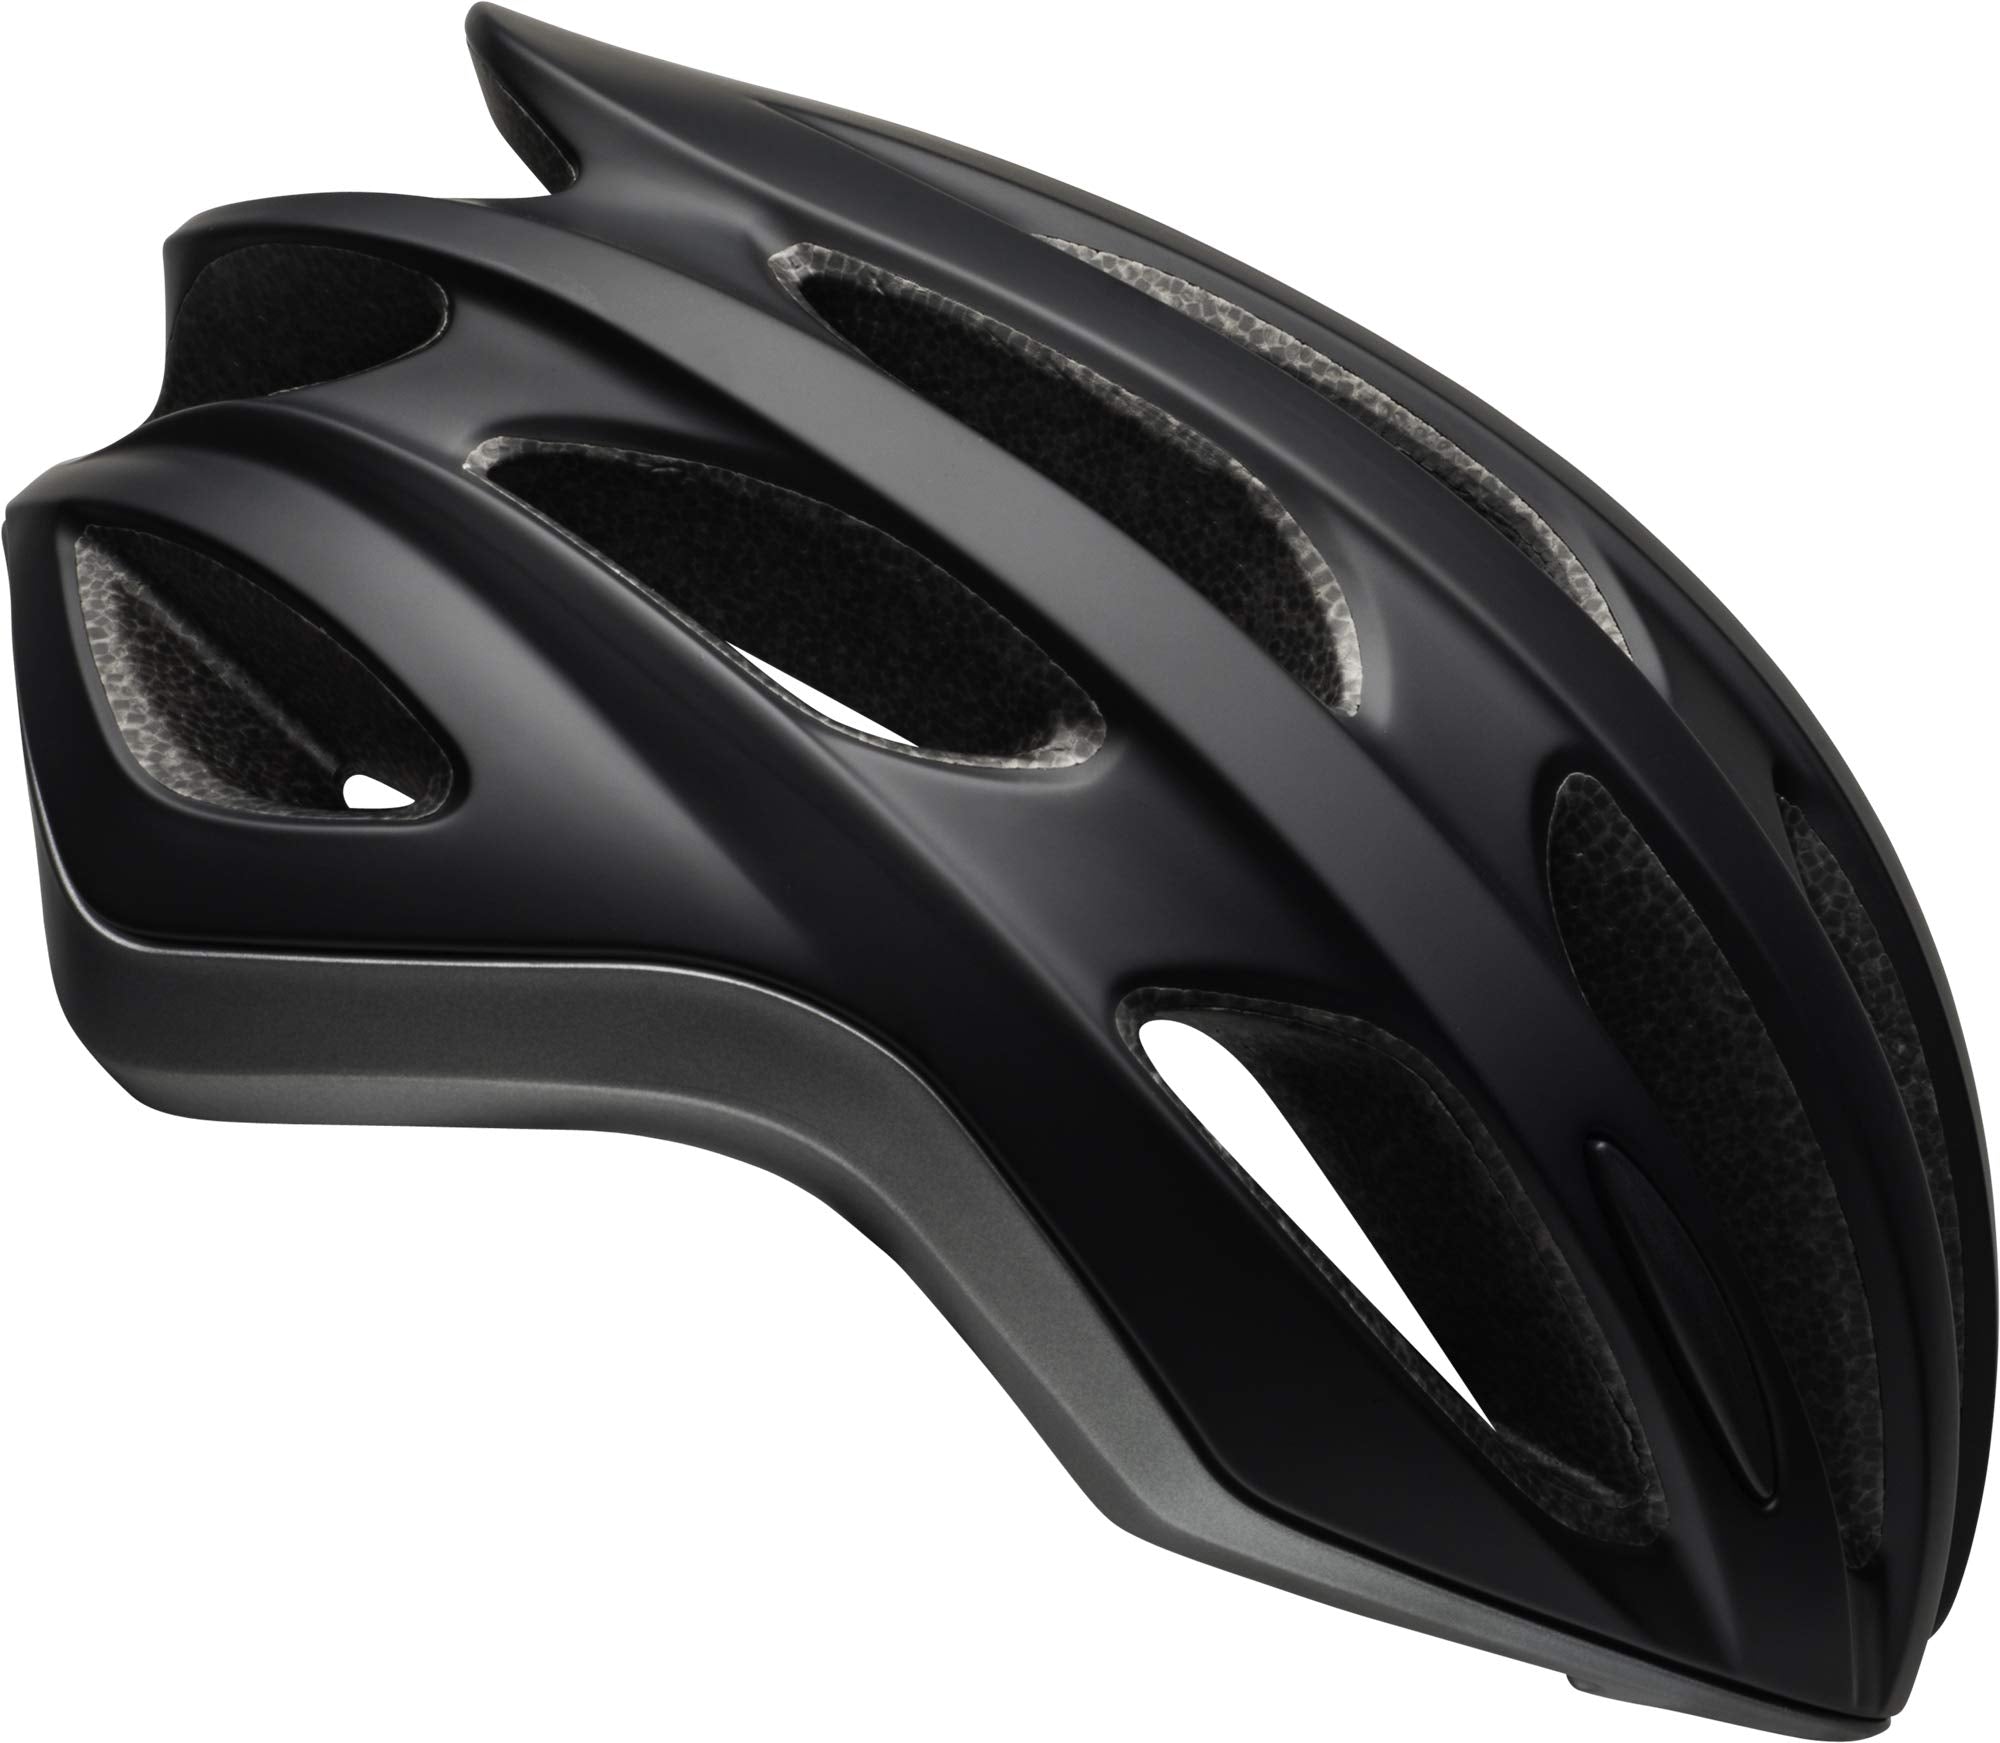 BELL Formula MIPS Adult Road Bike Helmet  - Like New